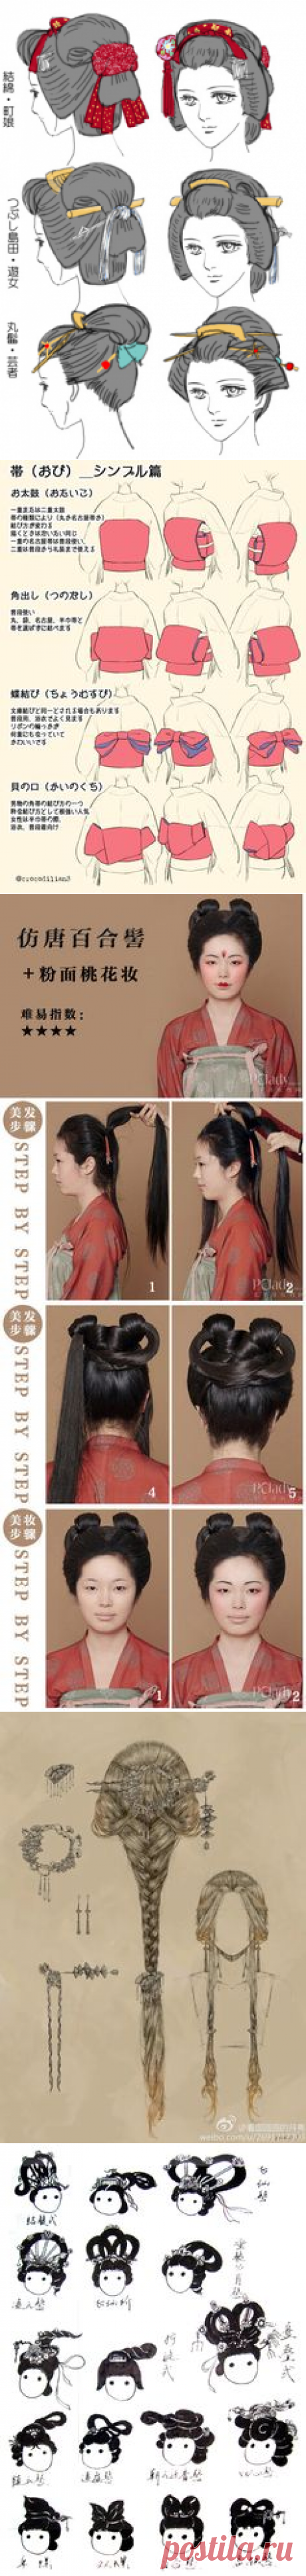 hair style during edo era in japan | Headpieces | Мультфильм, Дизайн и Манга